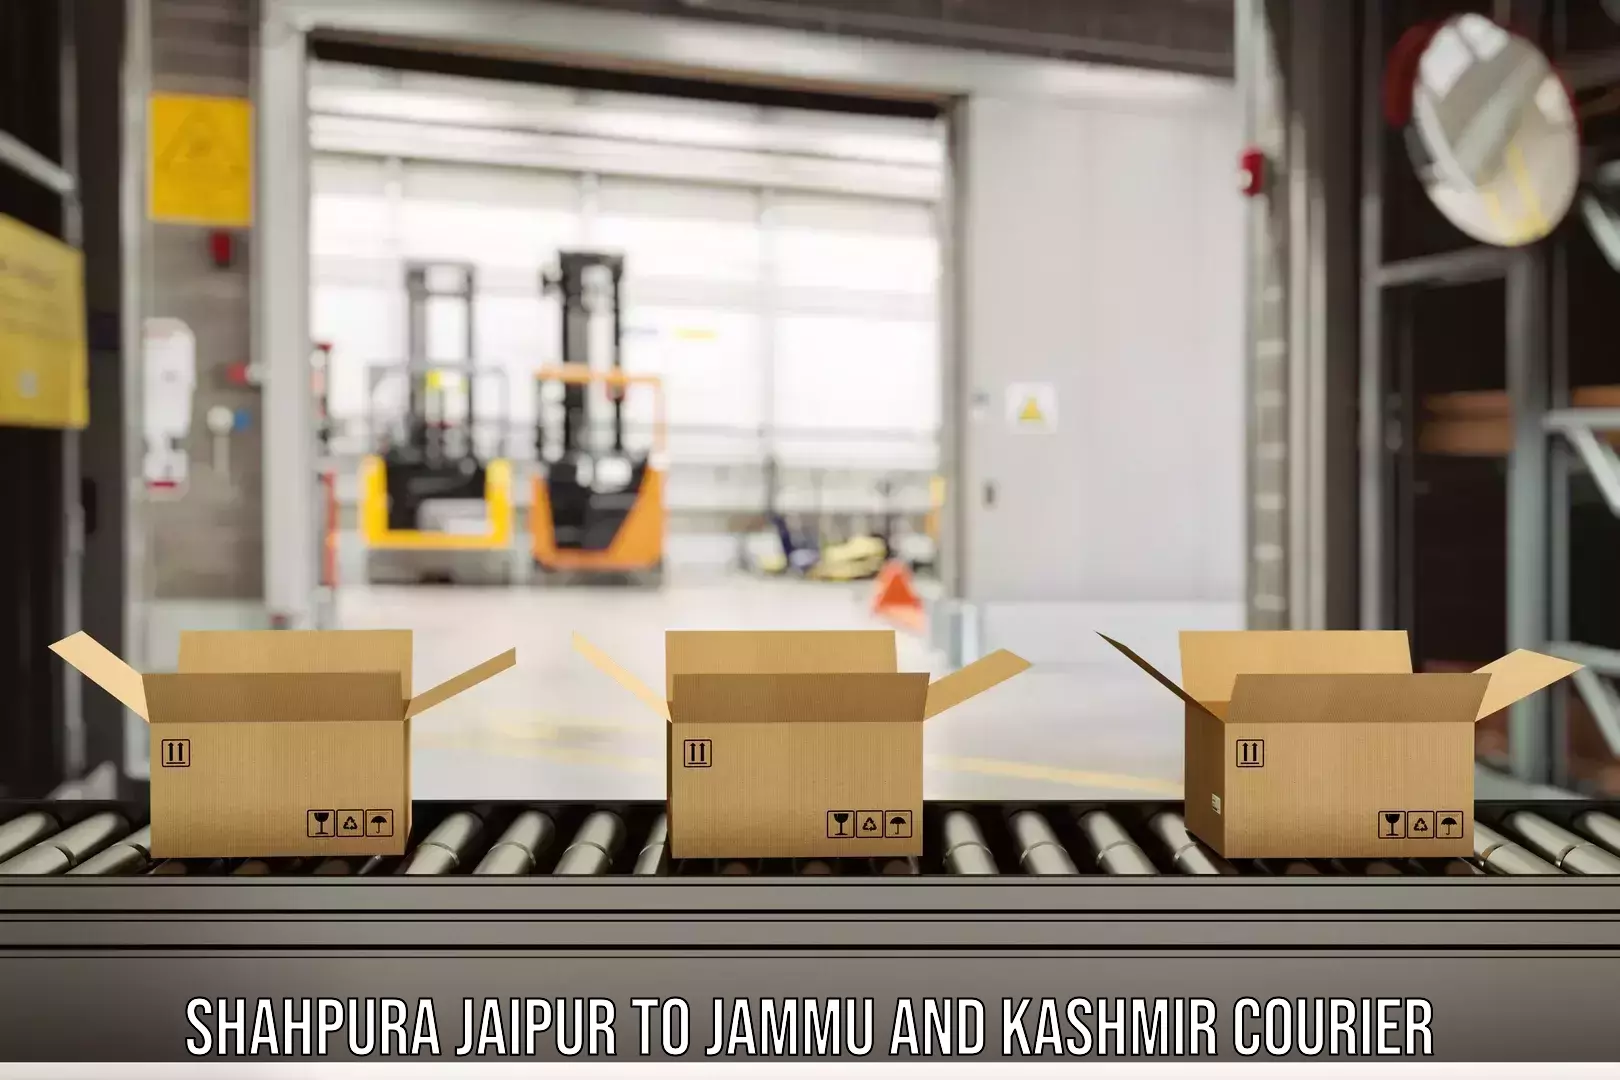 Nationwide parcel services Shahpura Jaipur to Baramulla